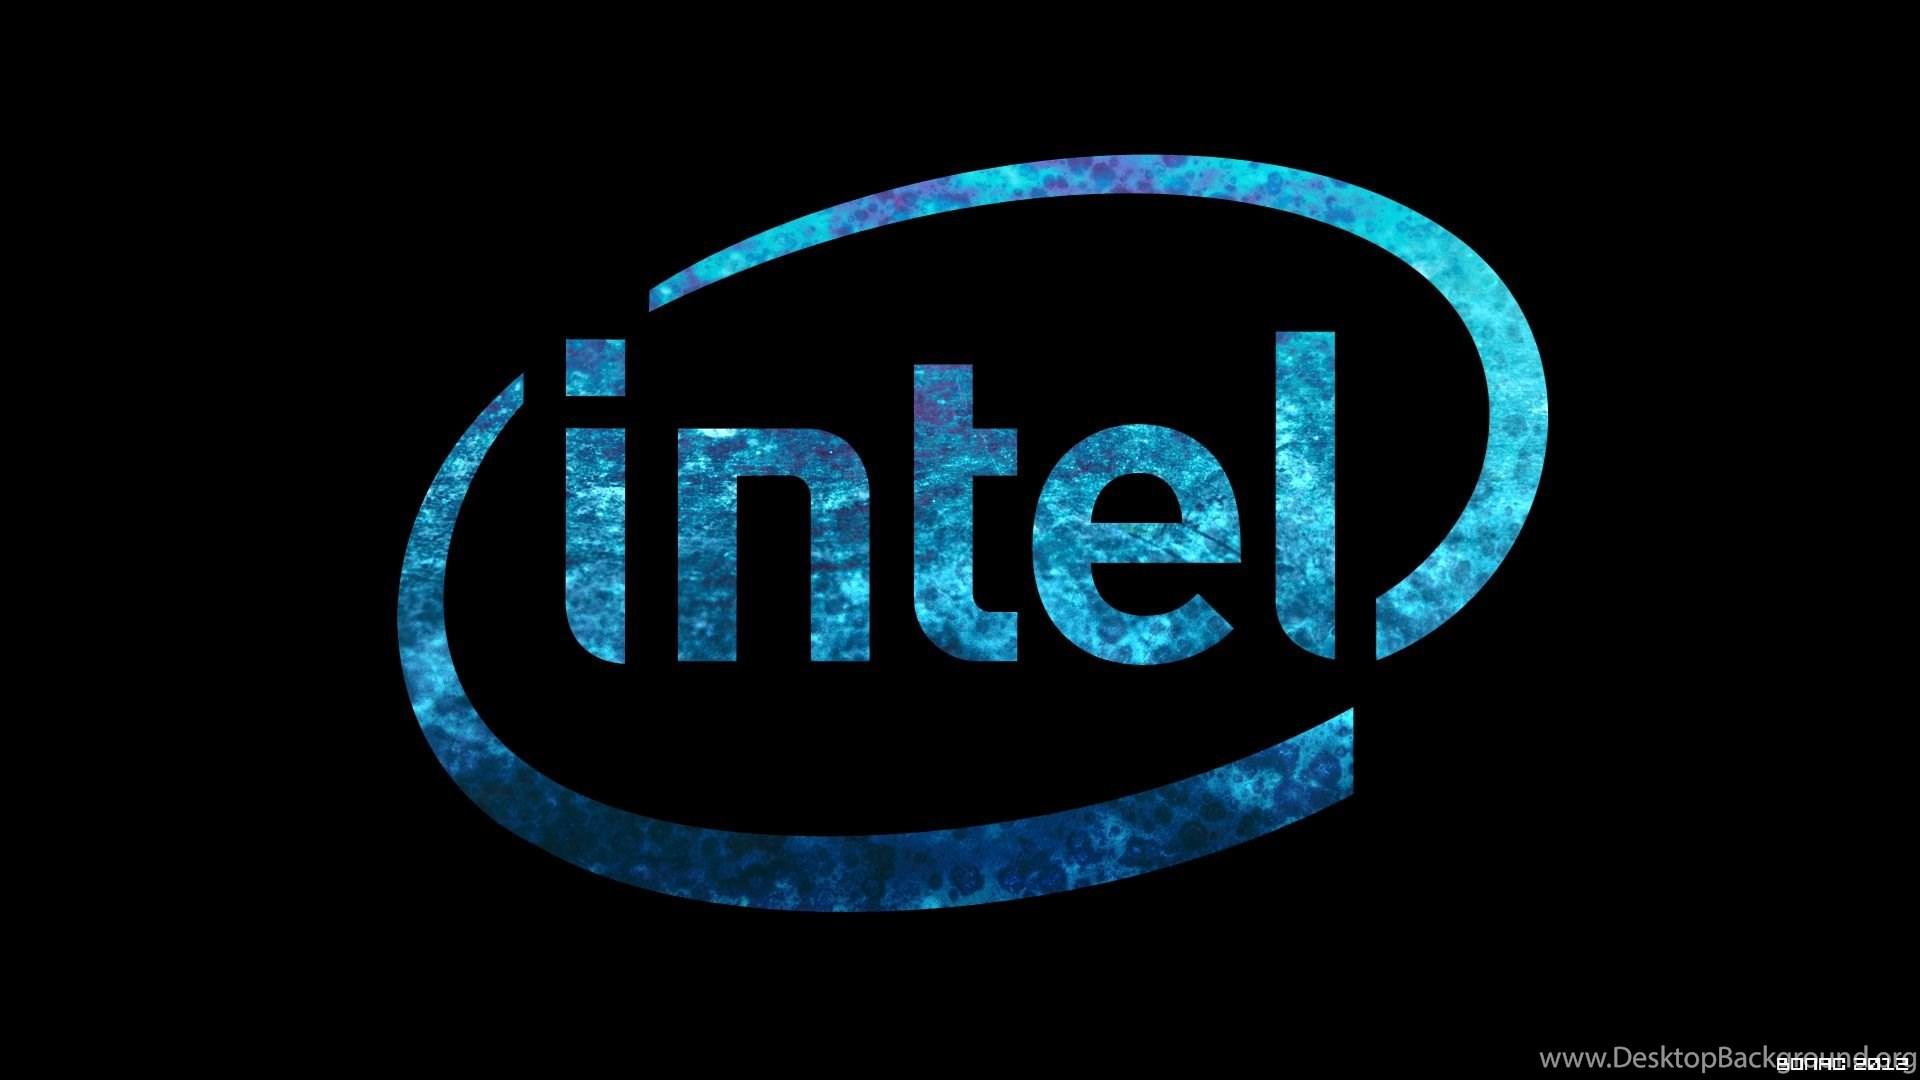 Intel Wallpaper Image Technology Speaks. Desktop Background